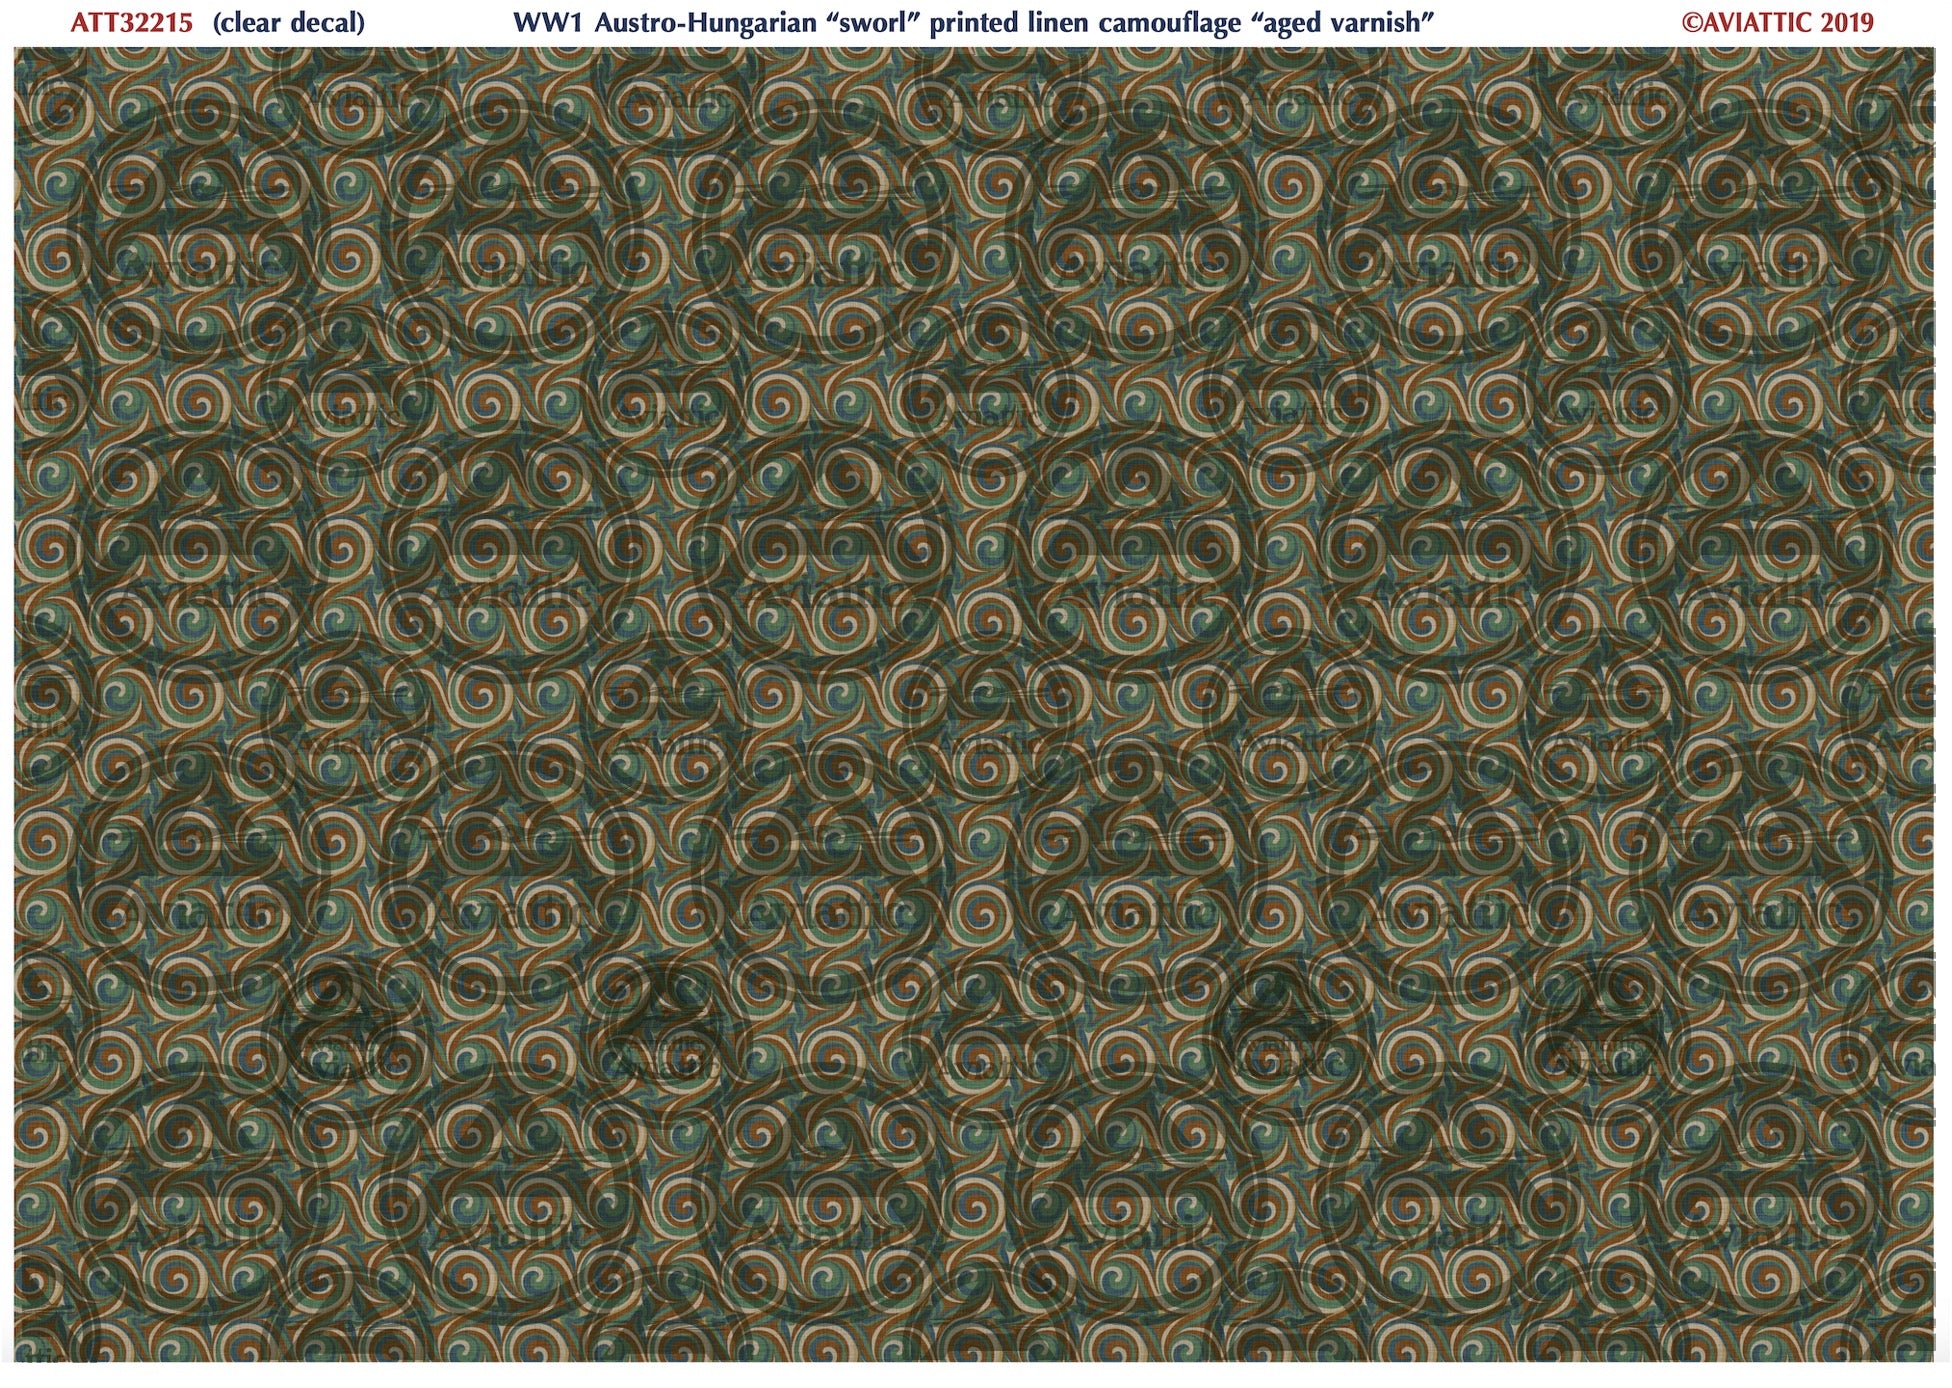 1/32 - WW1 Austro-Hungarian sworl printed linen camouflage - aged varnish